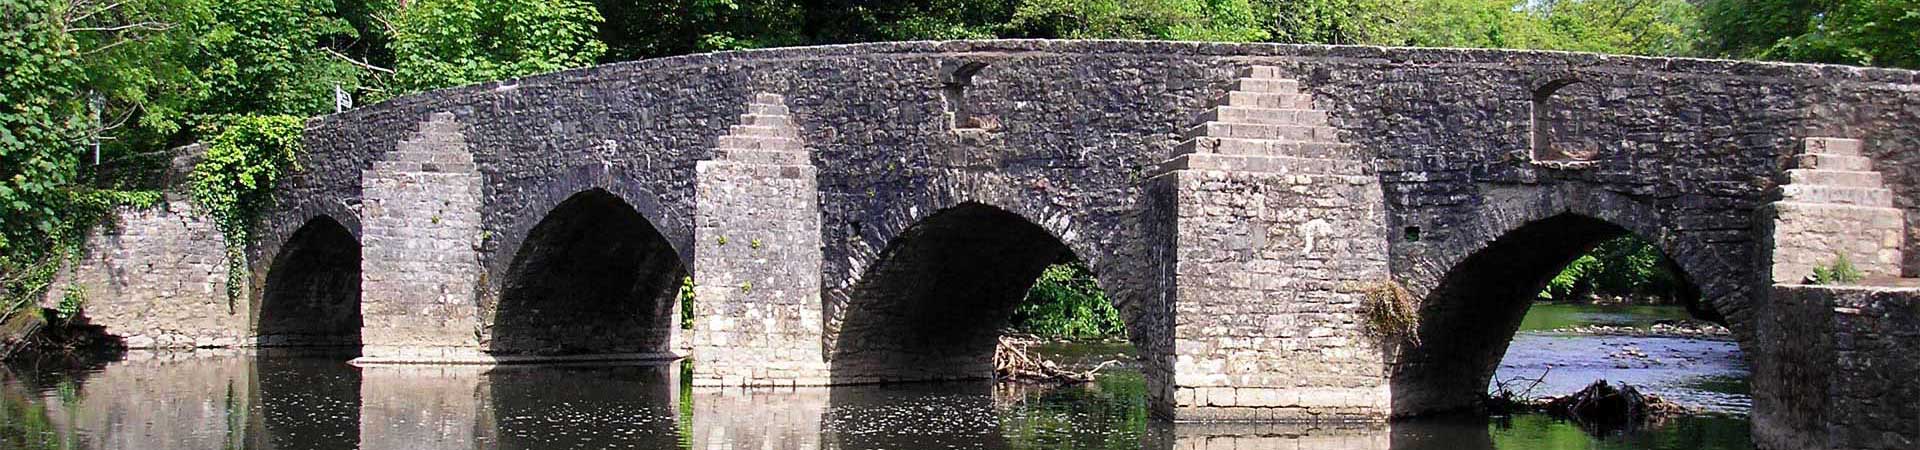 image of Merthyr Mawr bridge in Bridgend